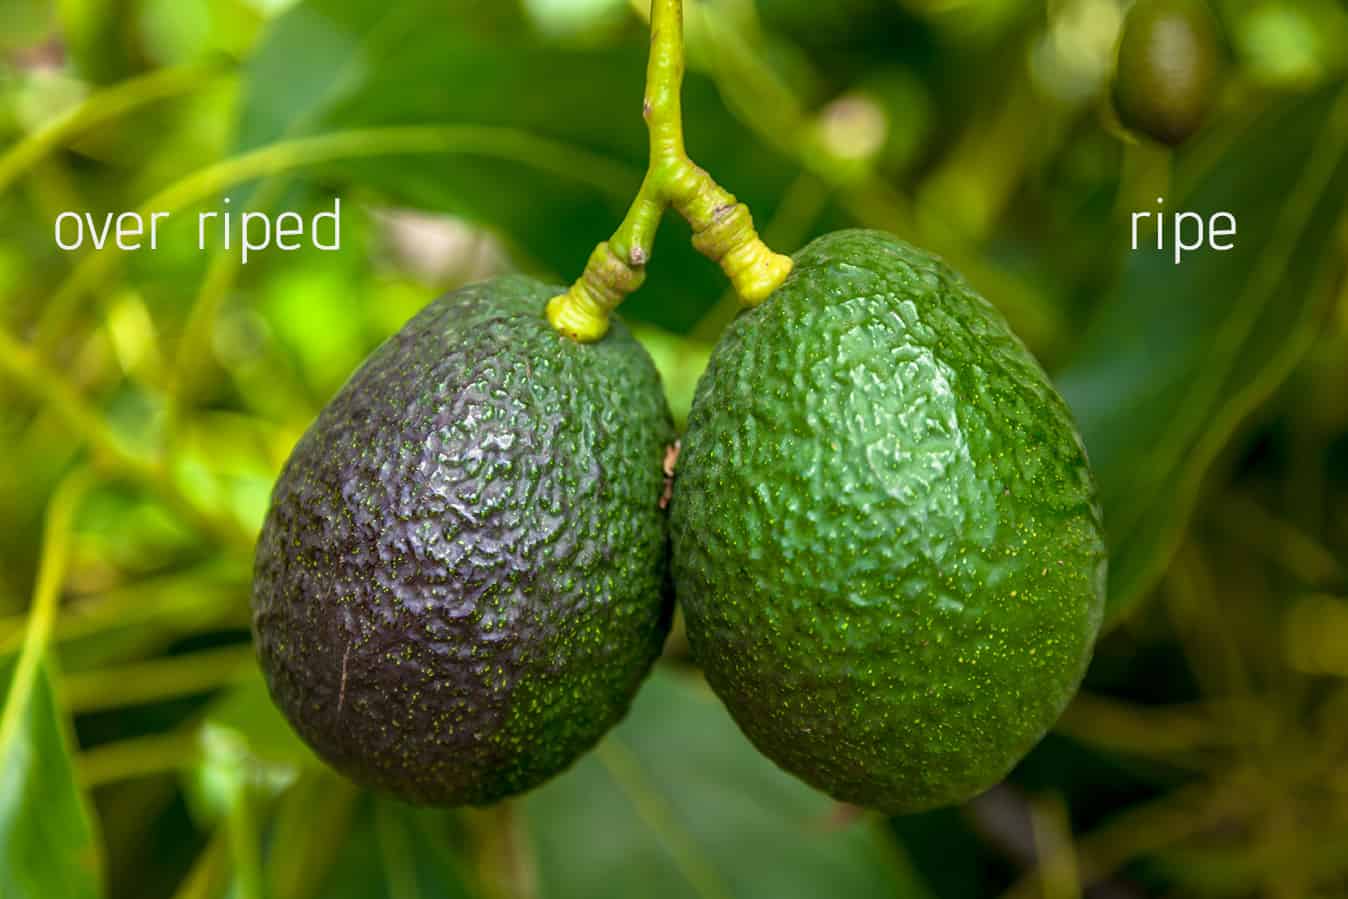 Ripe of avocados